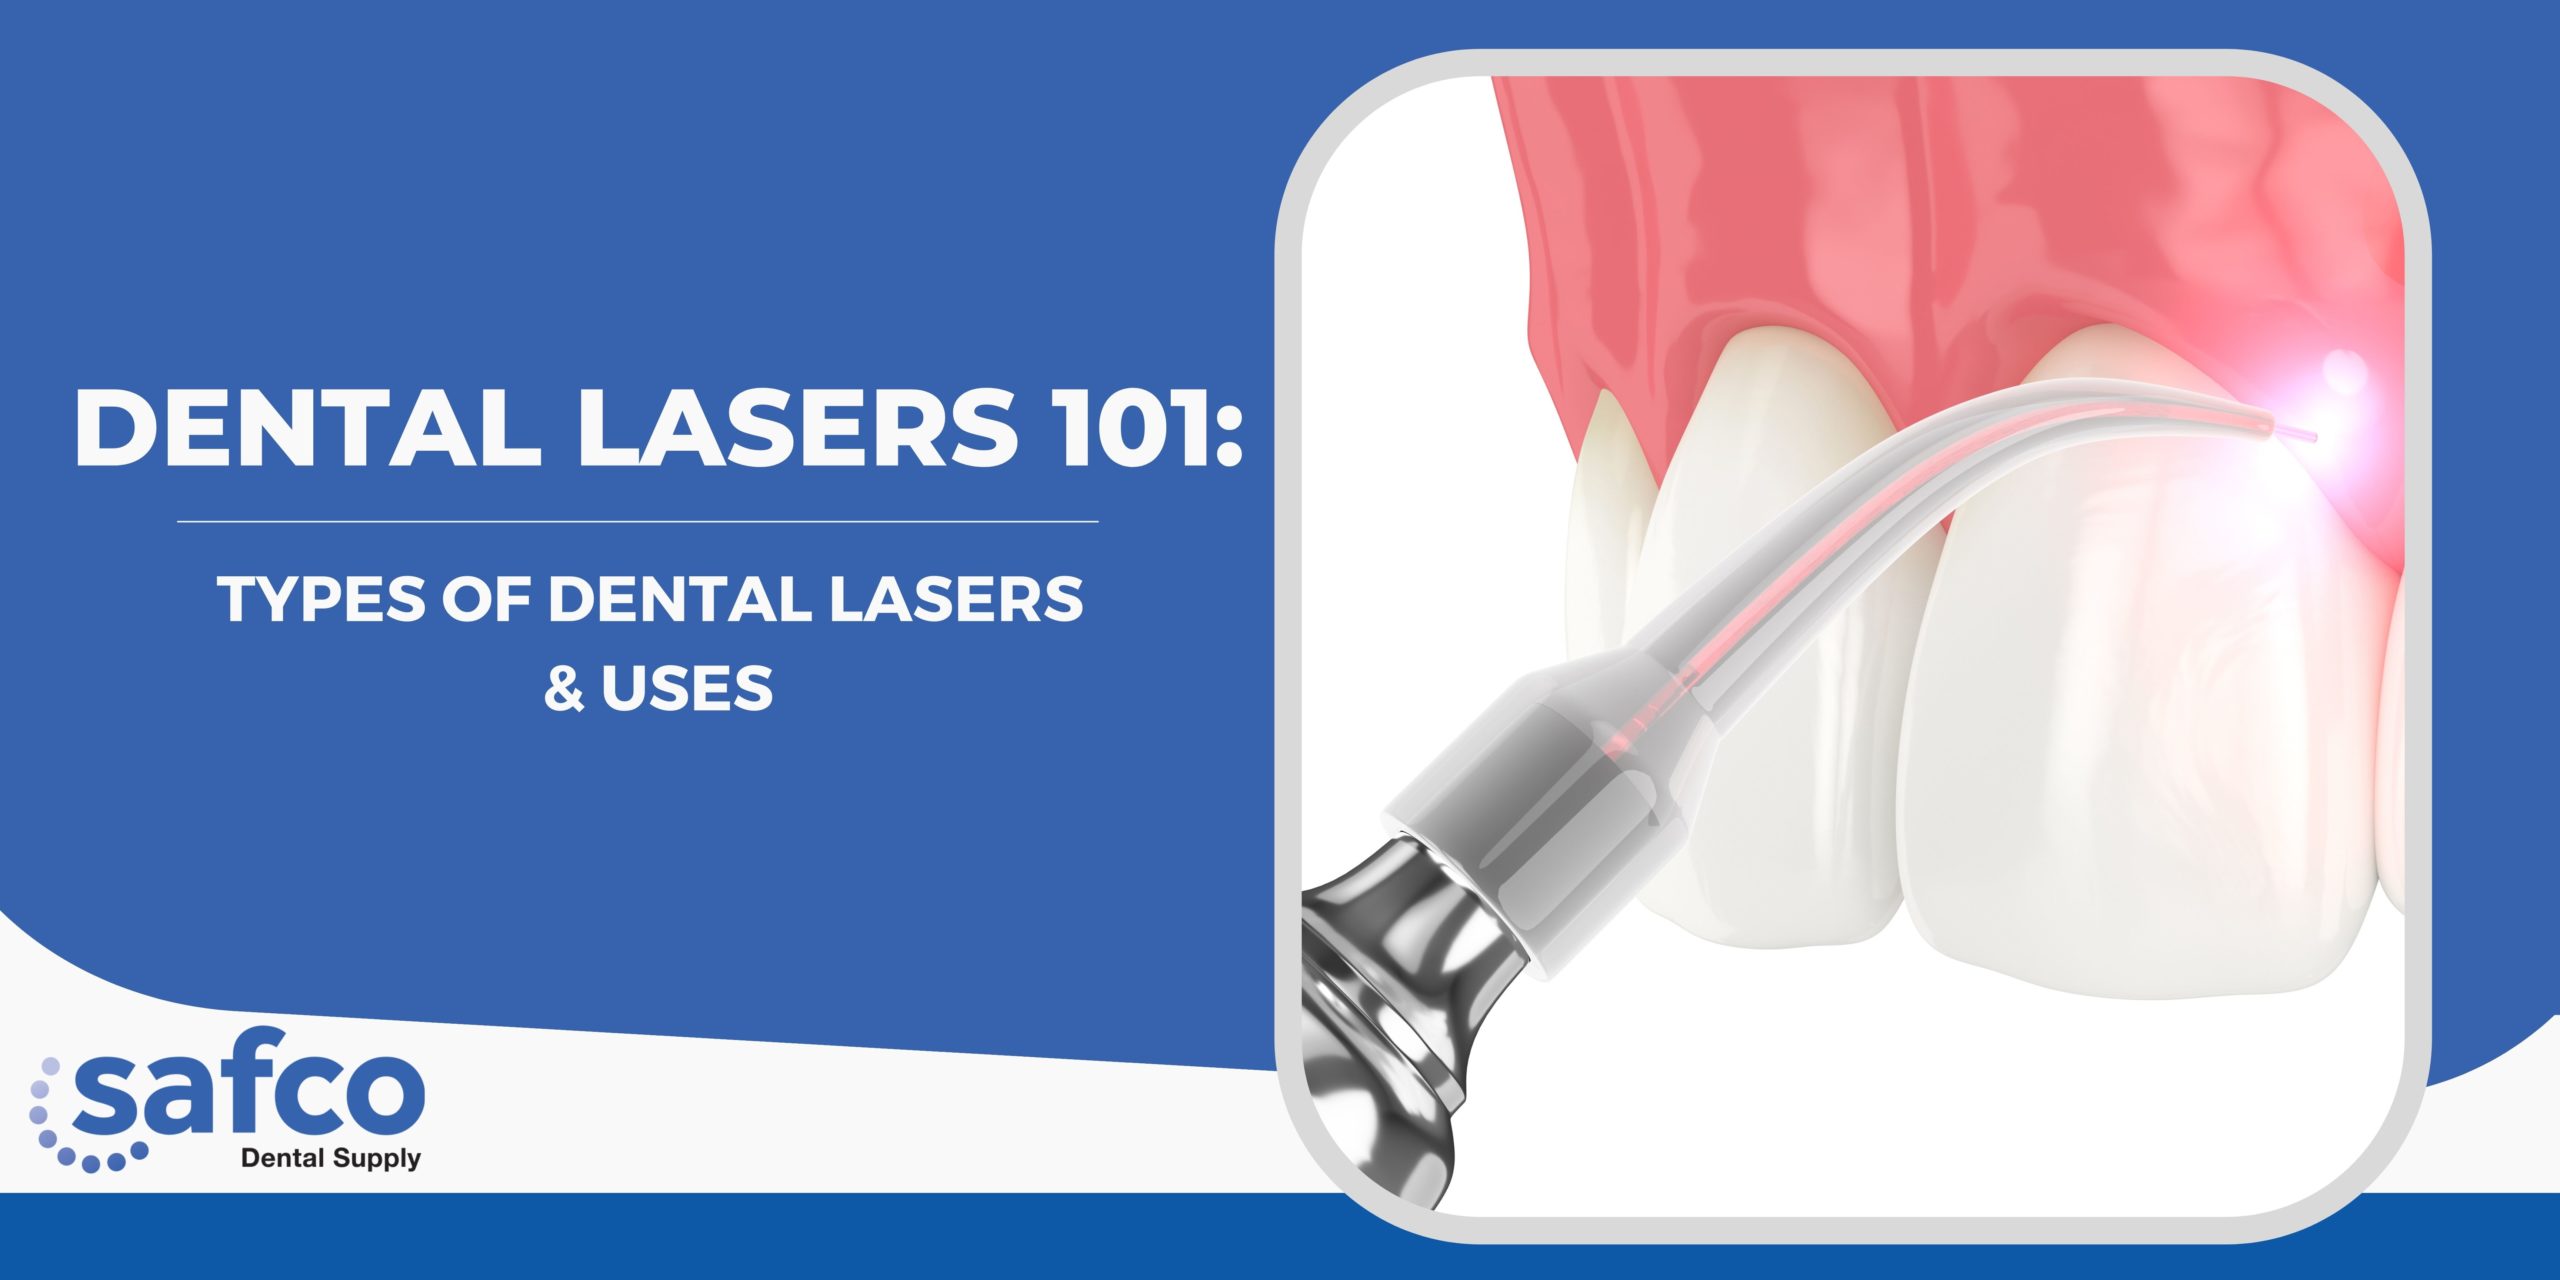 Dental Lasers 101: Types of Dental Lasers & Uses